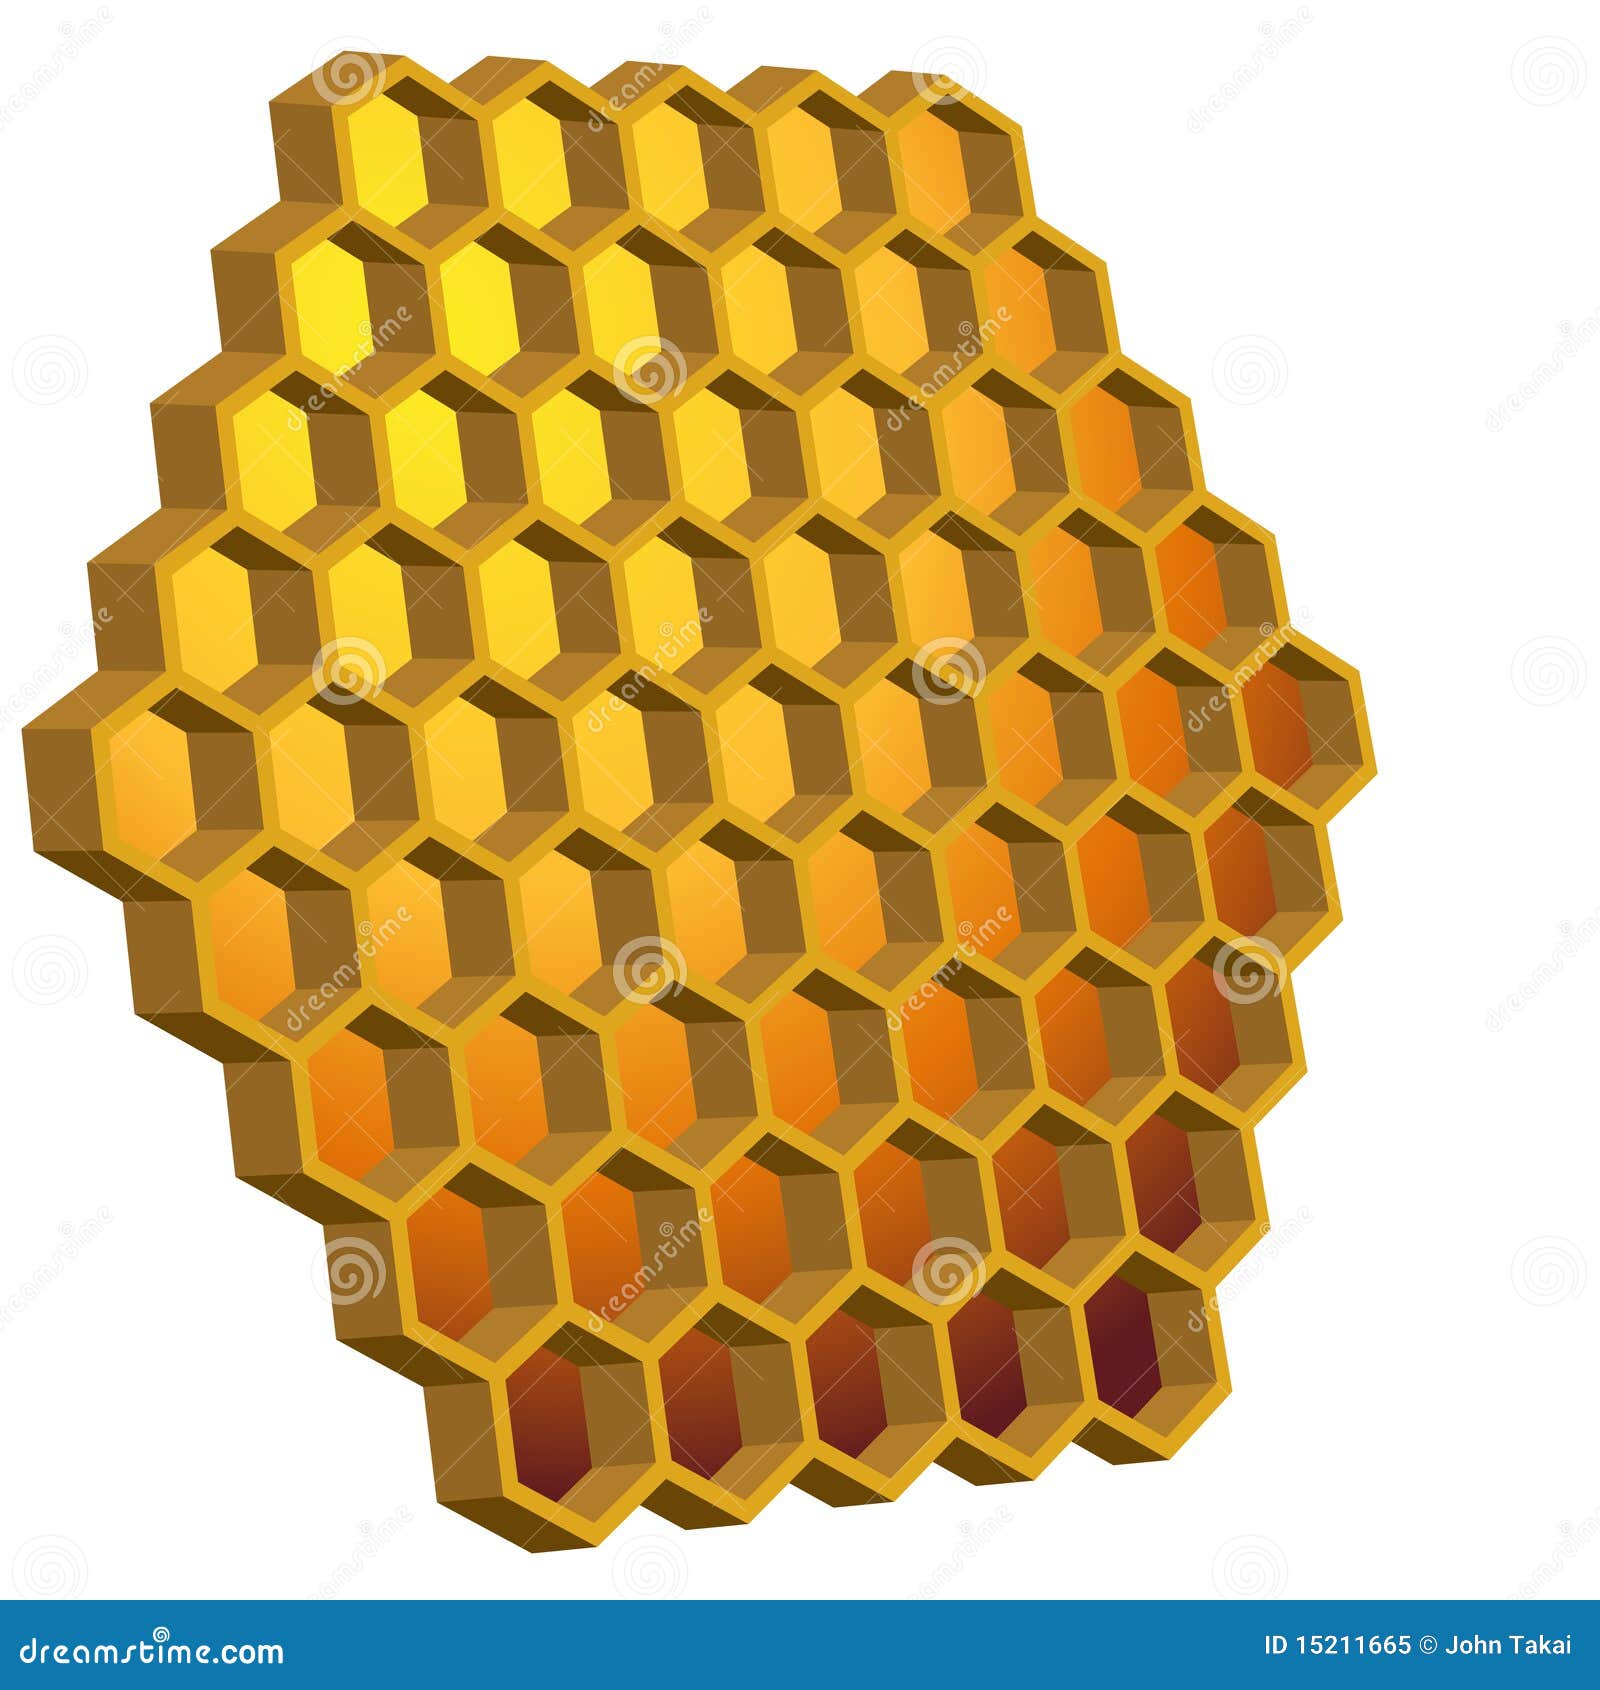 A Sample Honey Bee Farm Business Plan Template